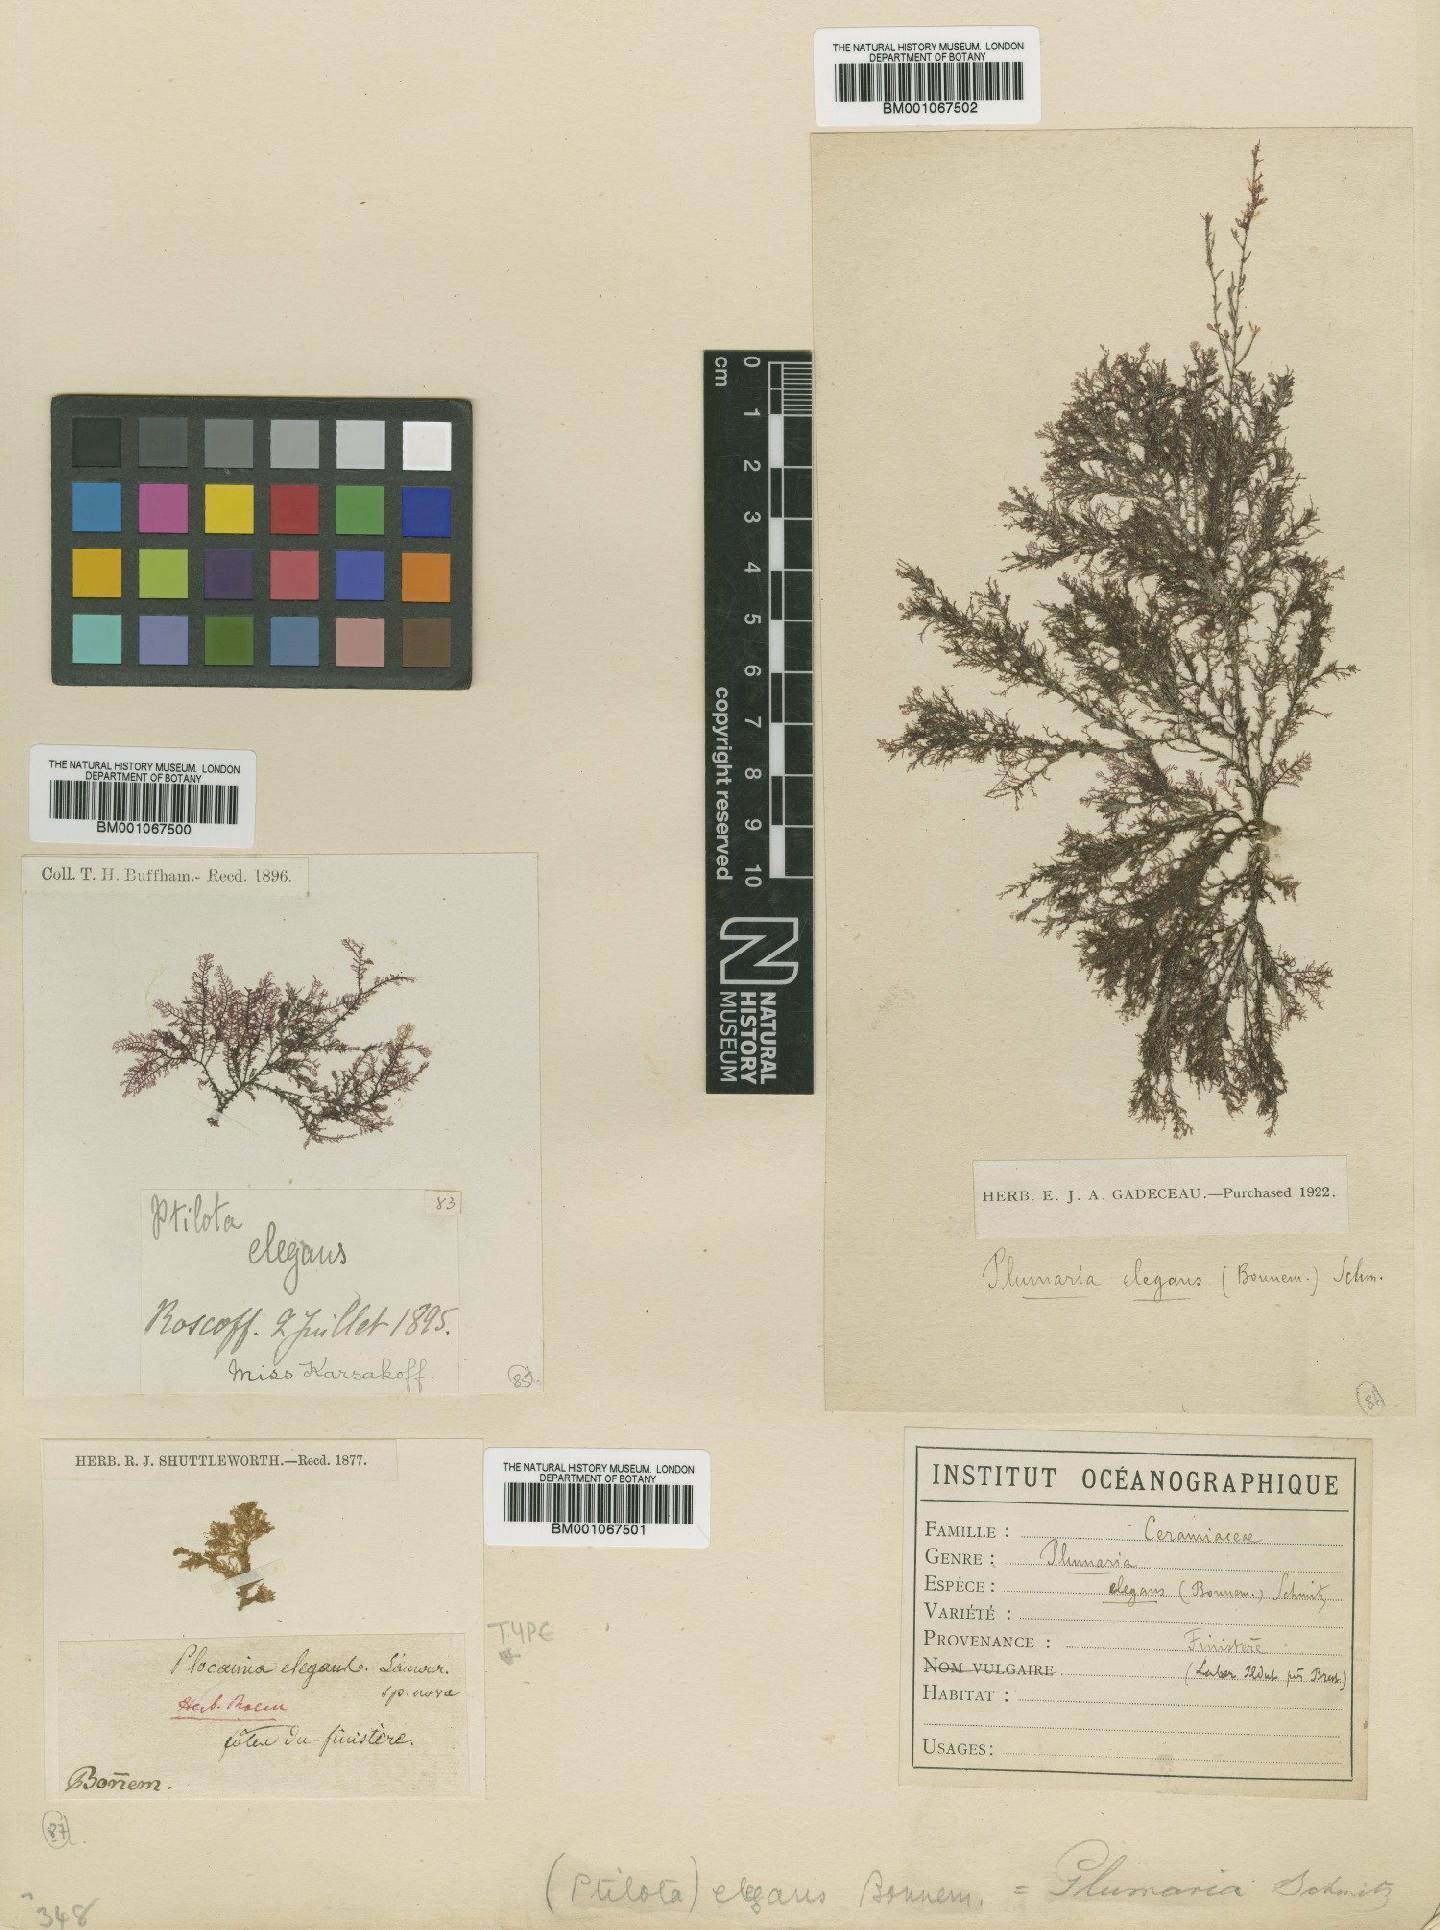 To NHMUK collection (Plumaria elegans (Bonnem.) F.Schmitz; NHMUK:ecatalogue:2298144)